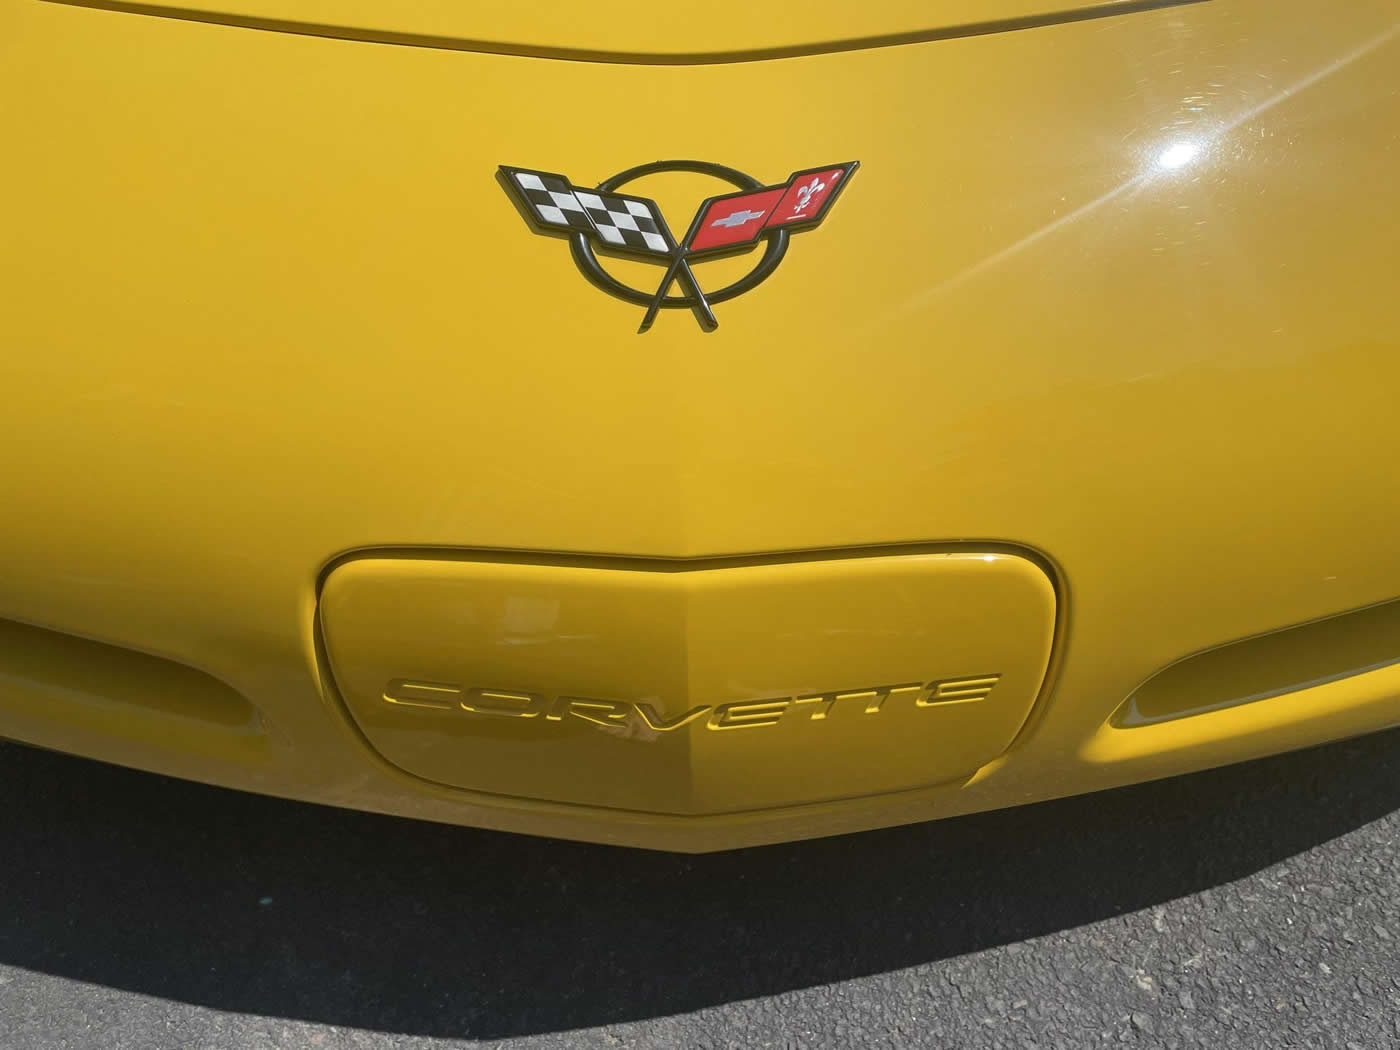 2004 Corvette Coupe in Millennium Yellow